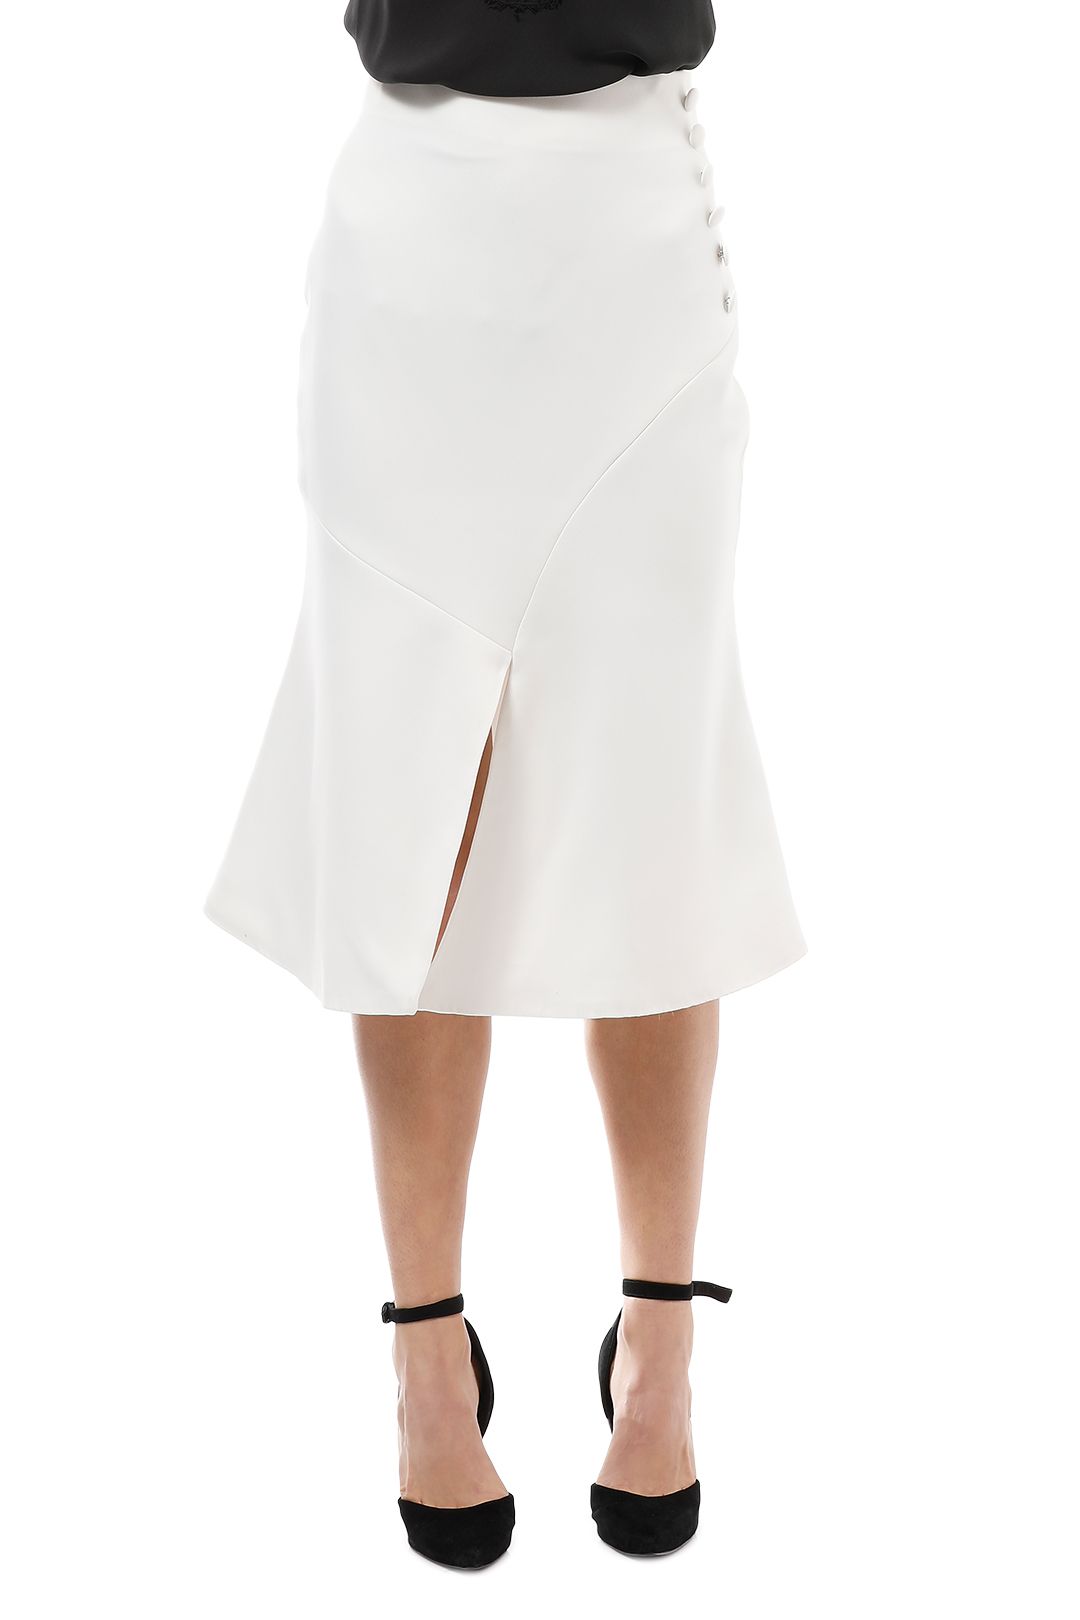 Elliatt - Plaza Skirt - White - Front Crop